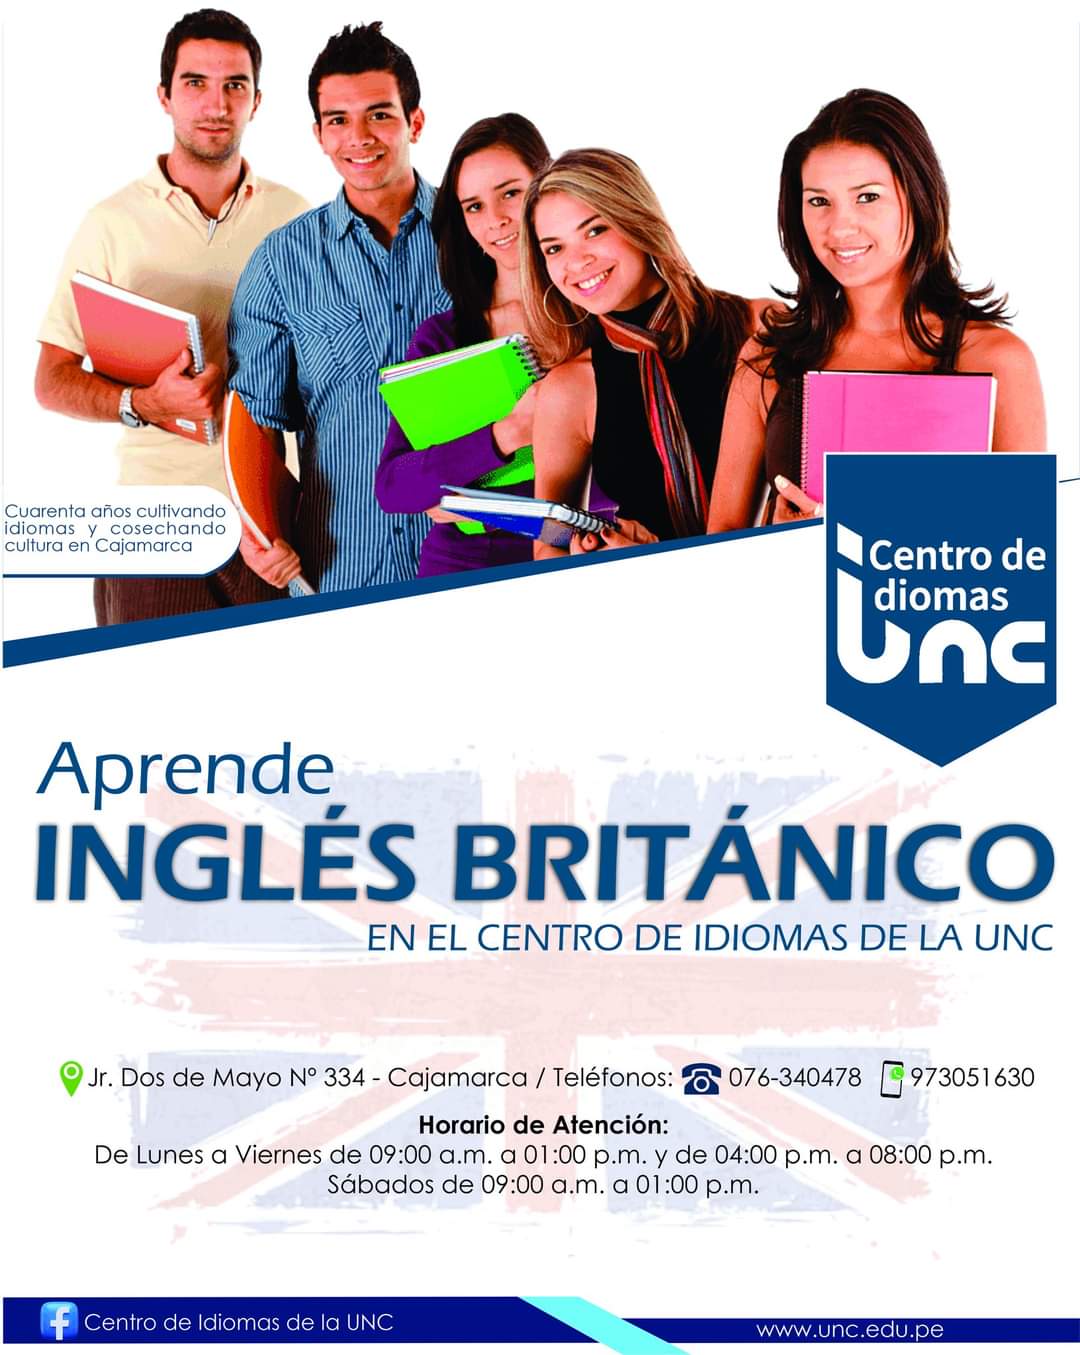 Centro de idiomas-Ingles britanico